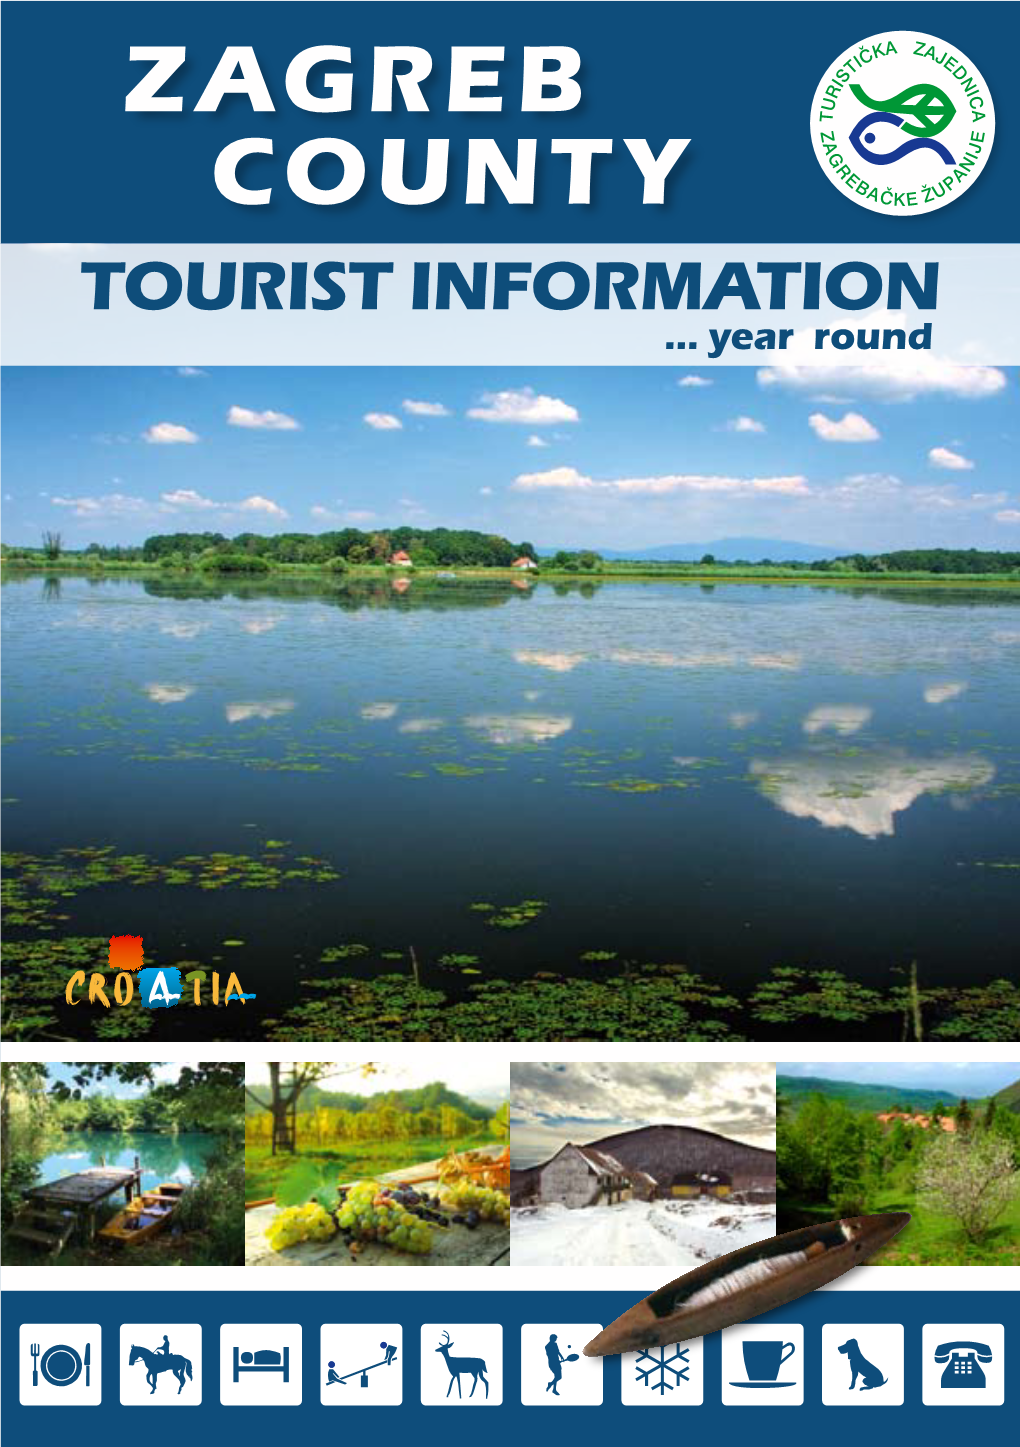 Zagreb County Tourist Information